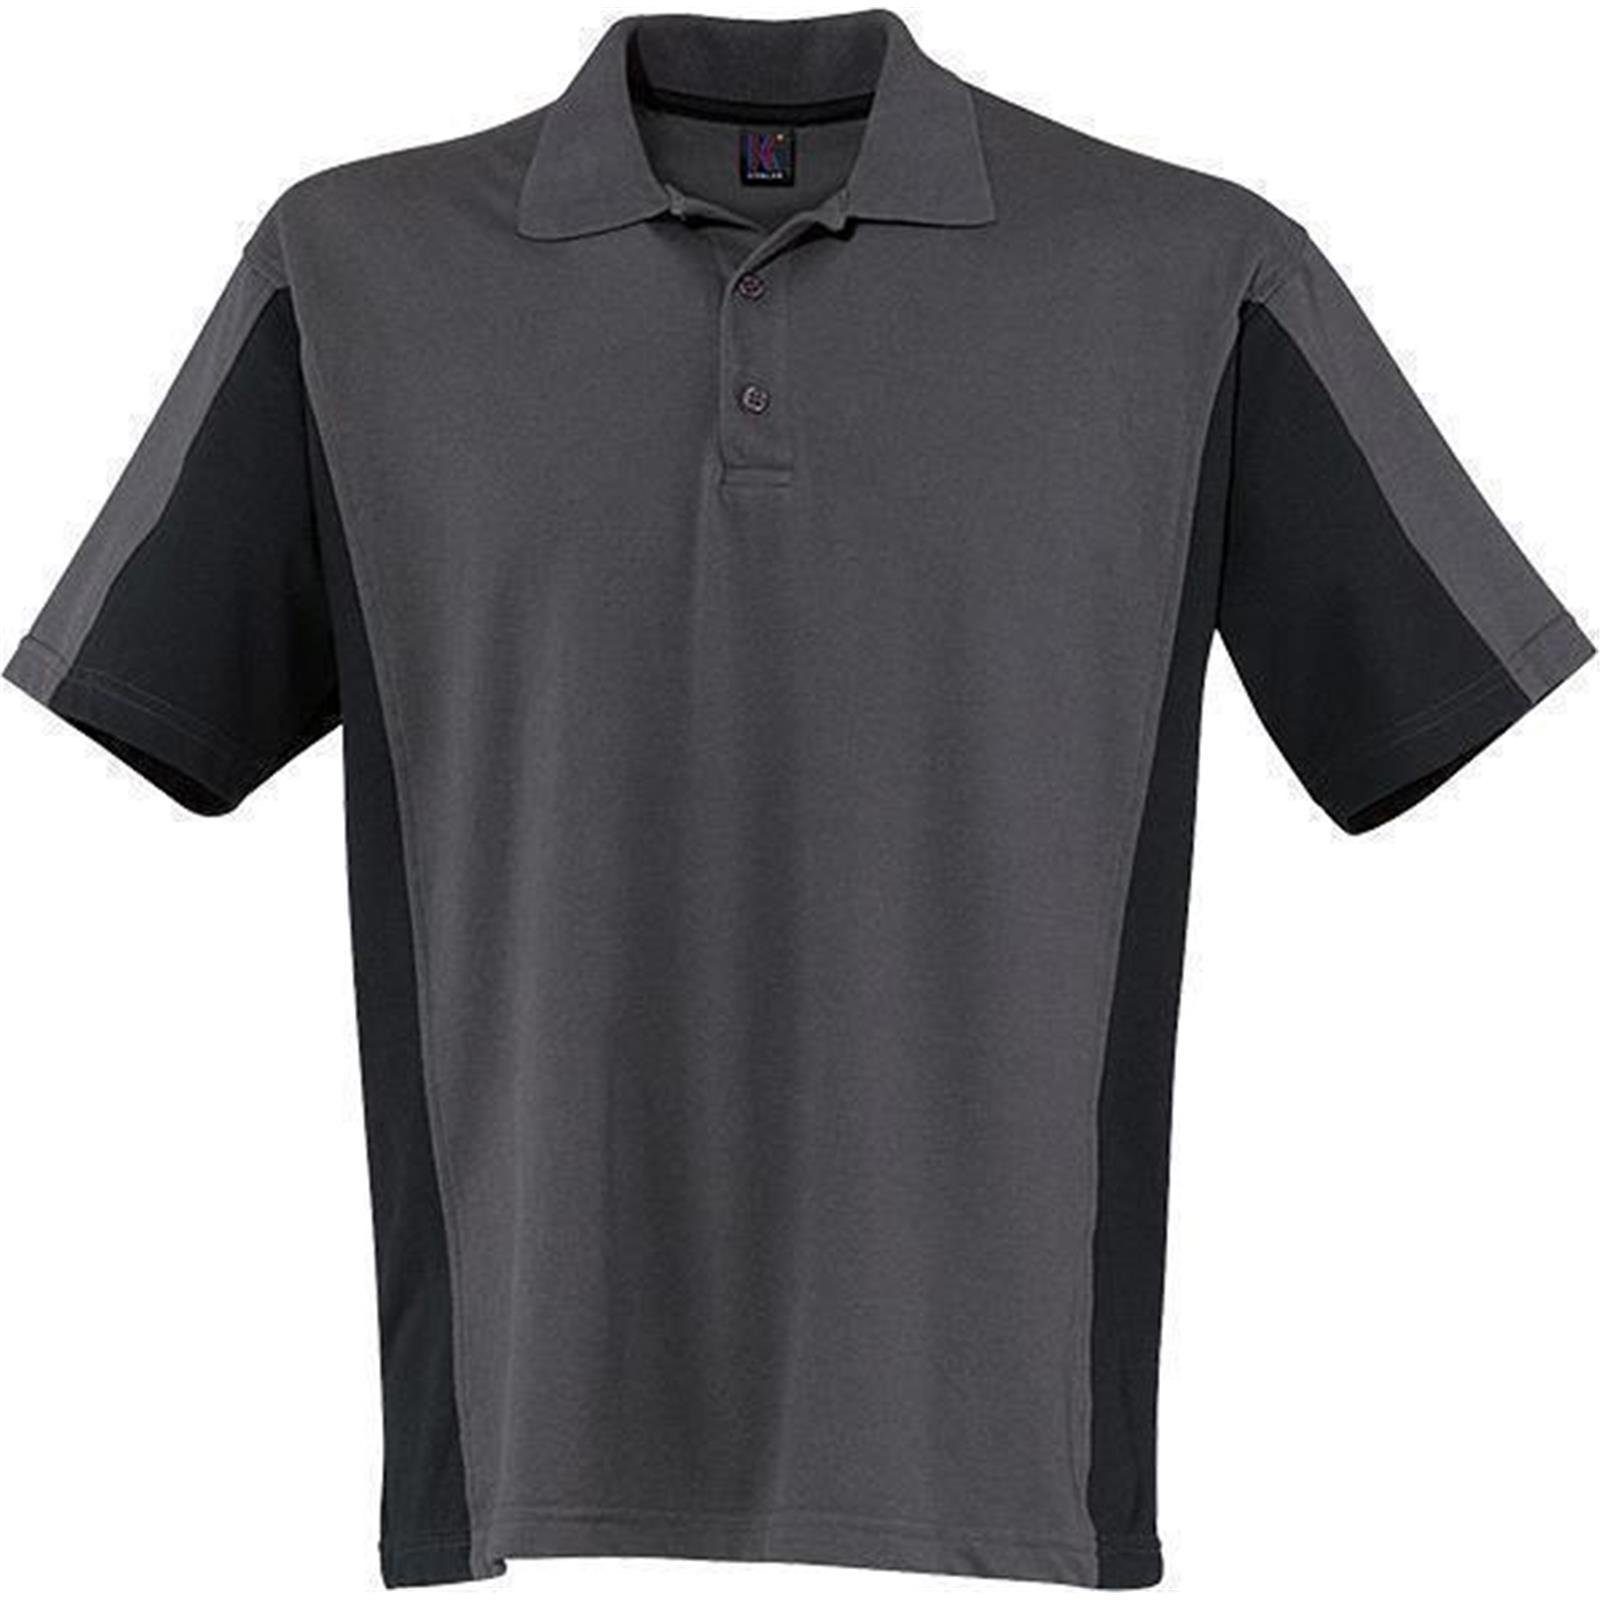 Shirt-Dress Kübler anthrazit/schwarz Poloshirt Kübler